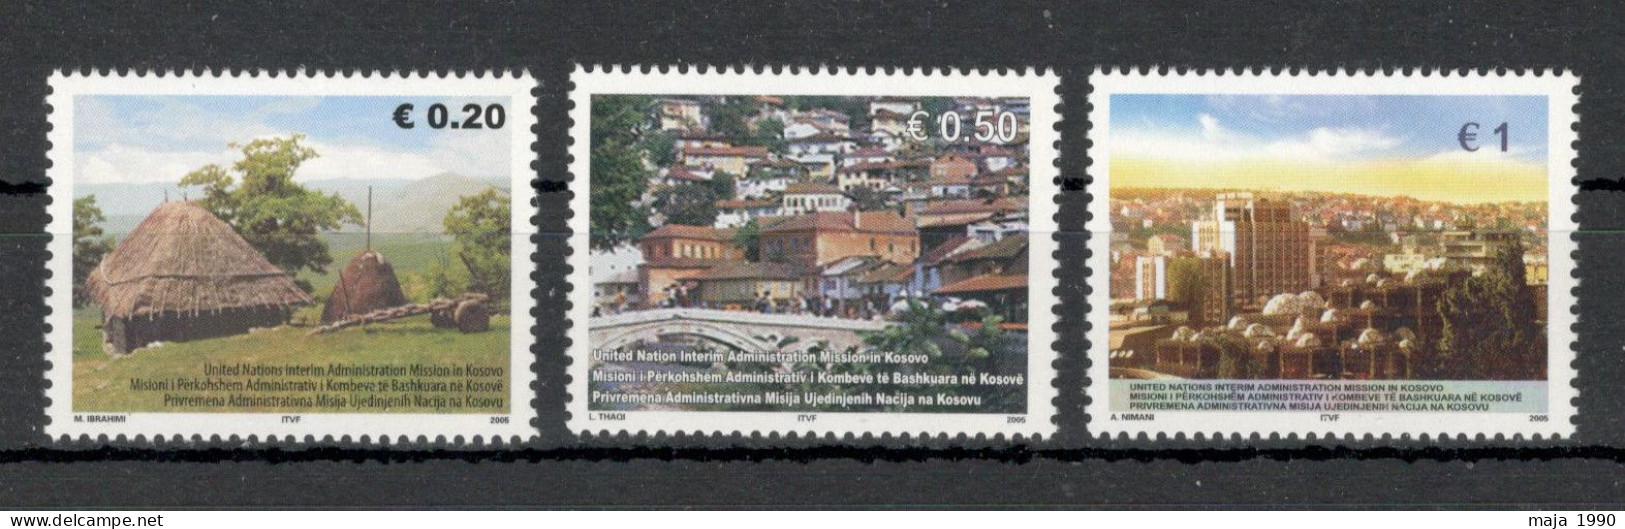 KOSOVO - MNH SET - ARCHITECTURE - 2005. - Kosovo